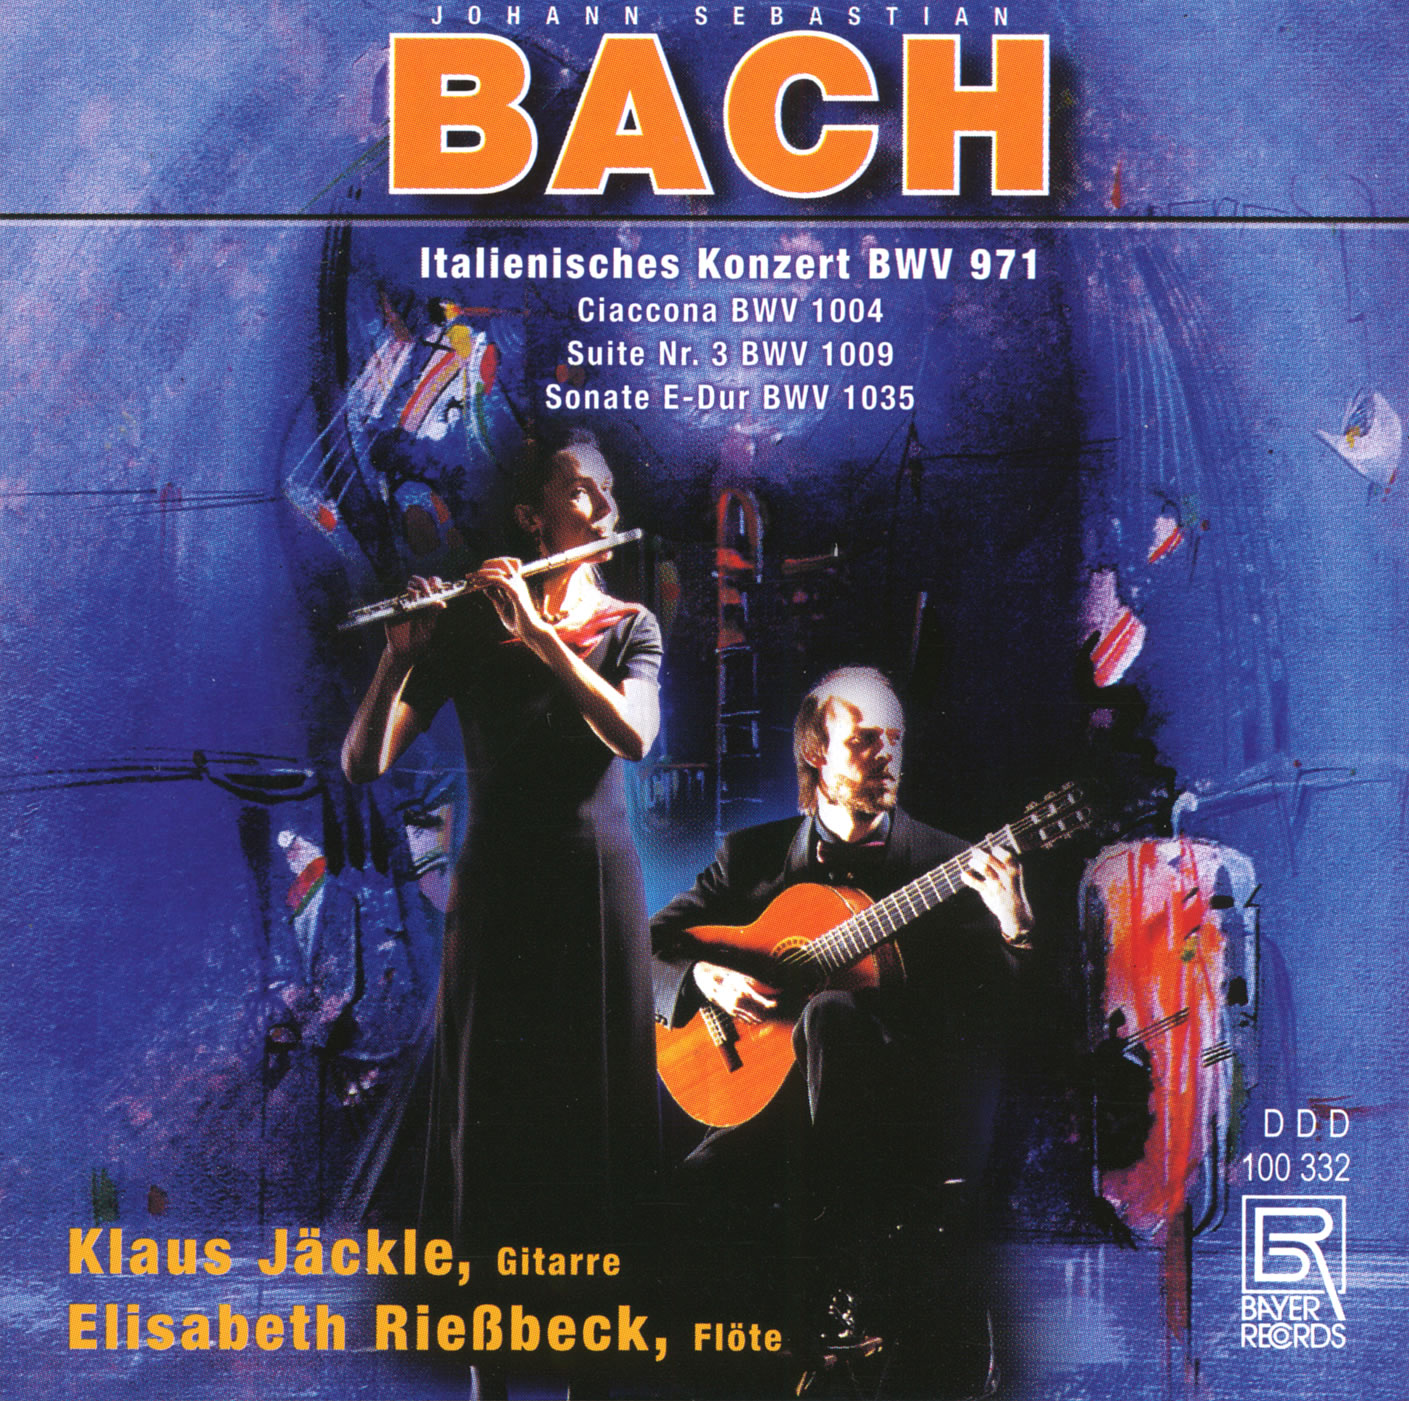 Johann Sebastian Bach für Gitarre und Flöte